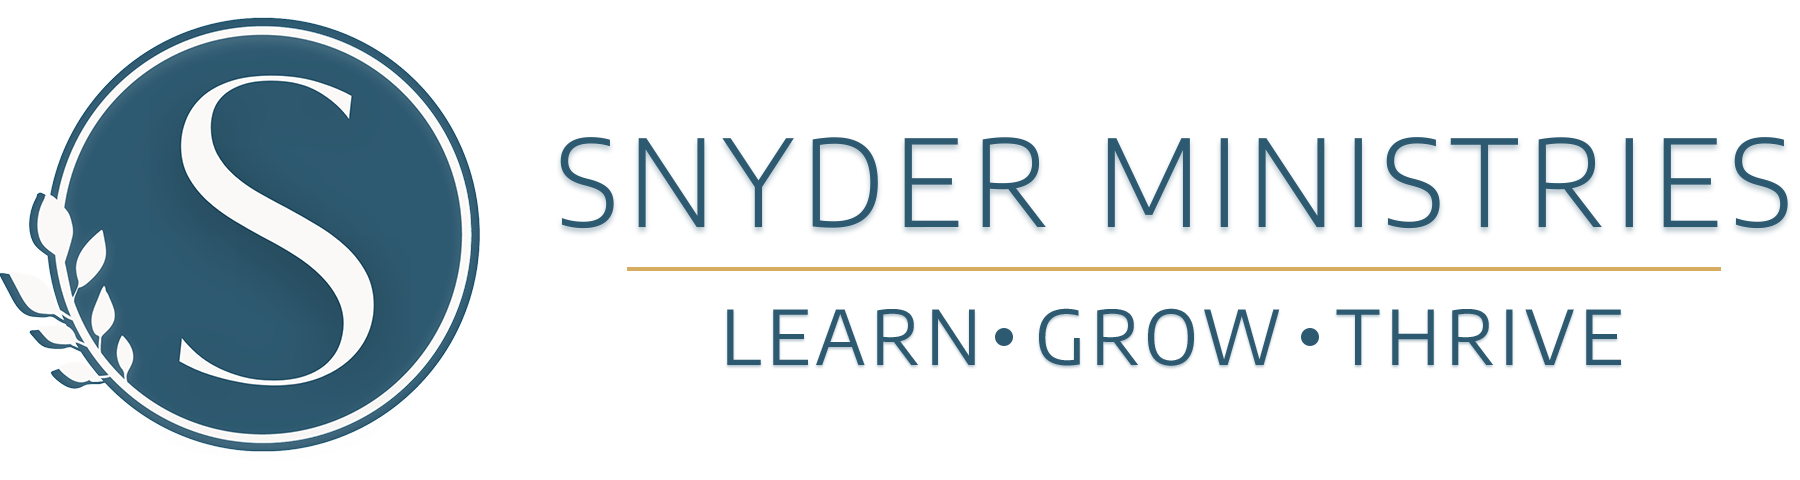 Snyder Ministries logo